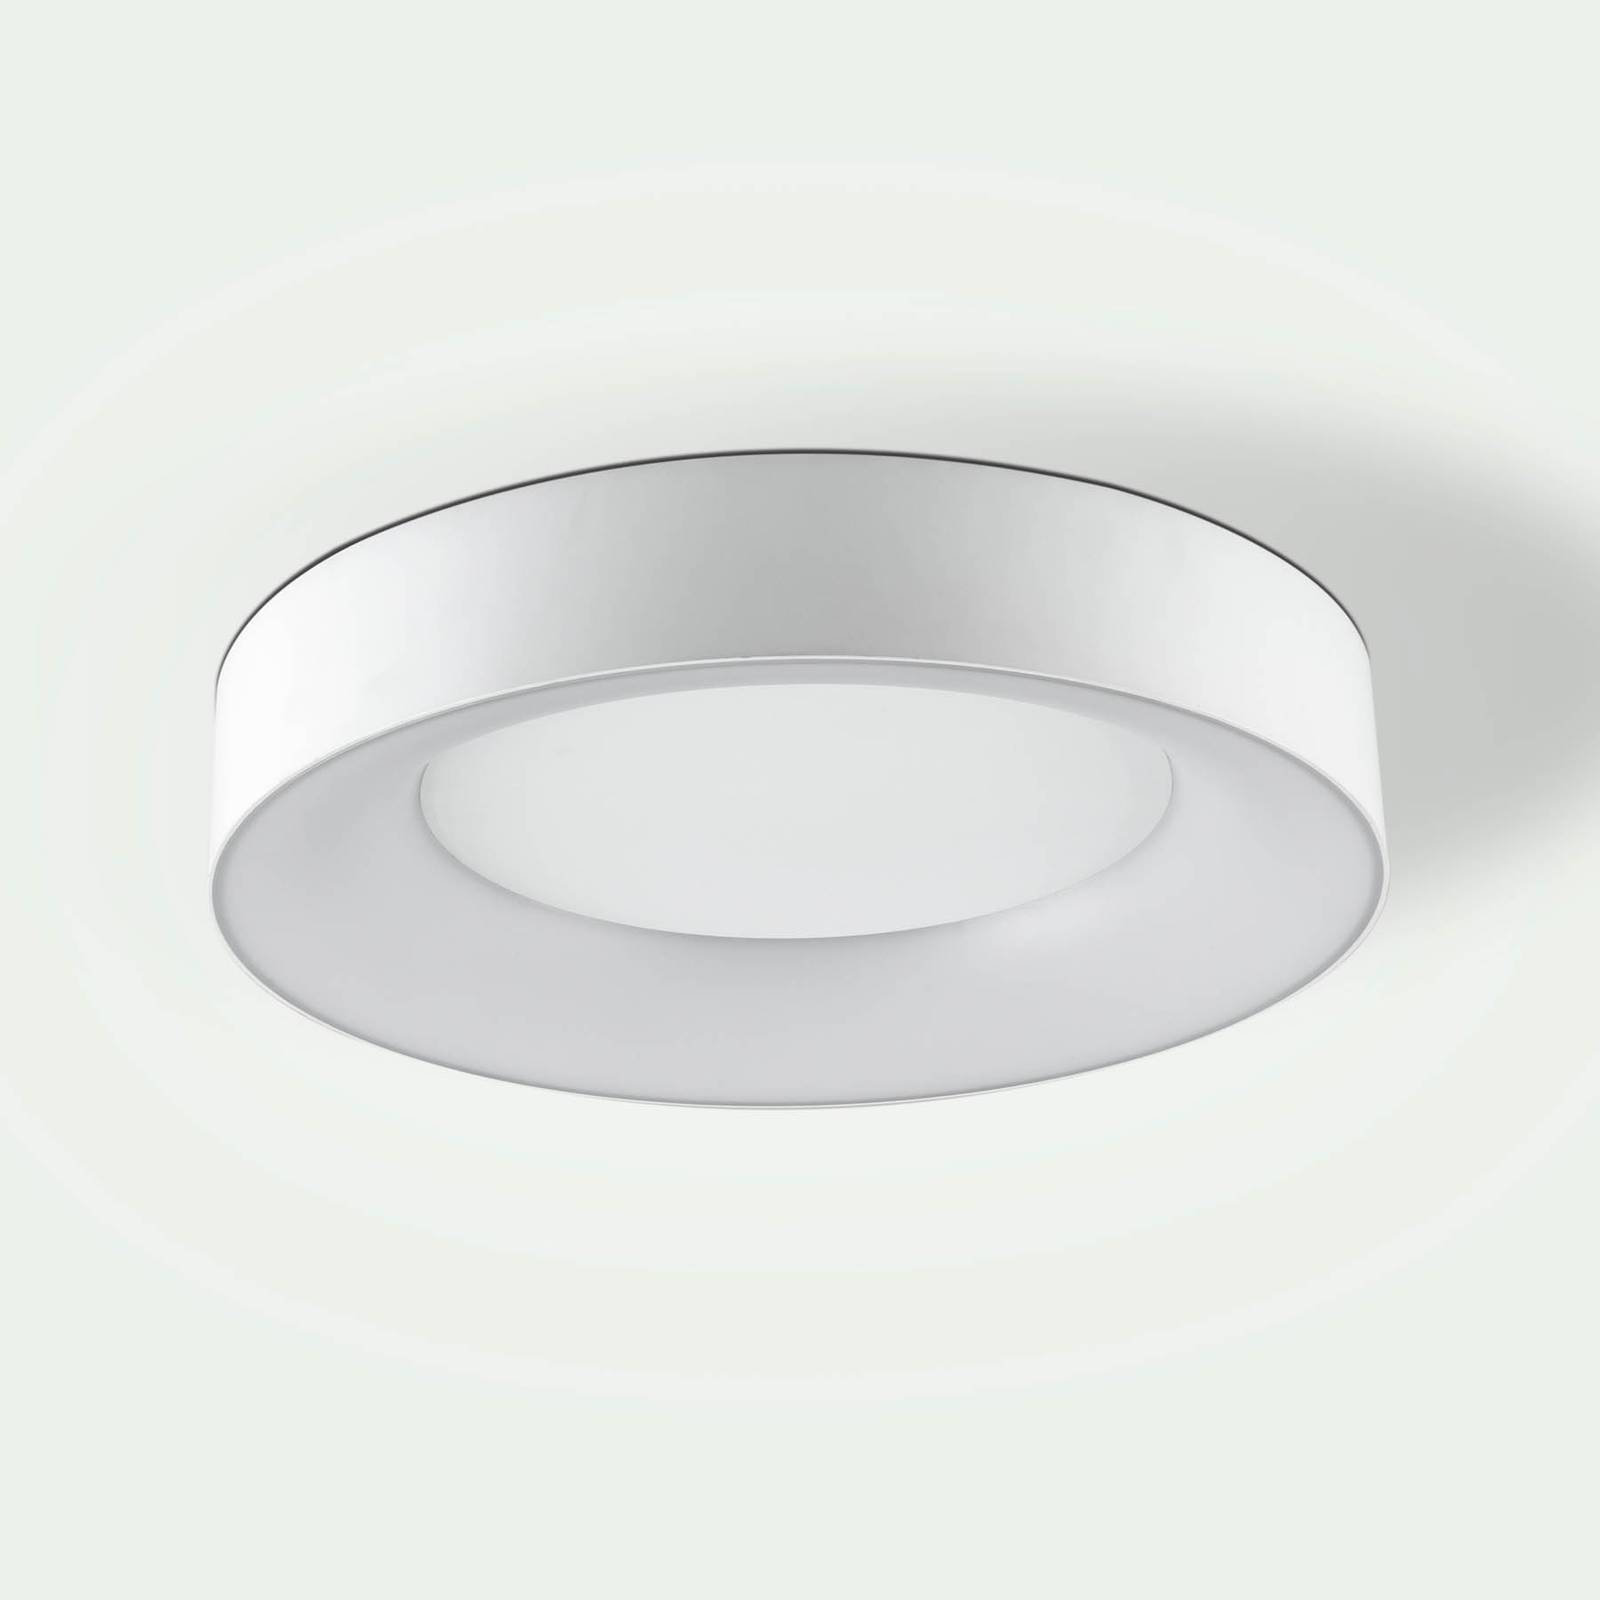 Lampa sufitowa LED R40, Ø 40 cm, biała